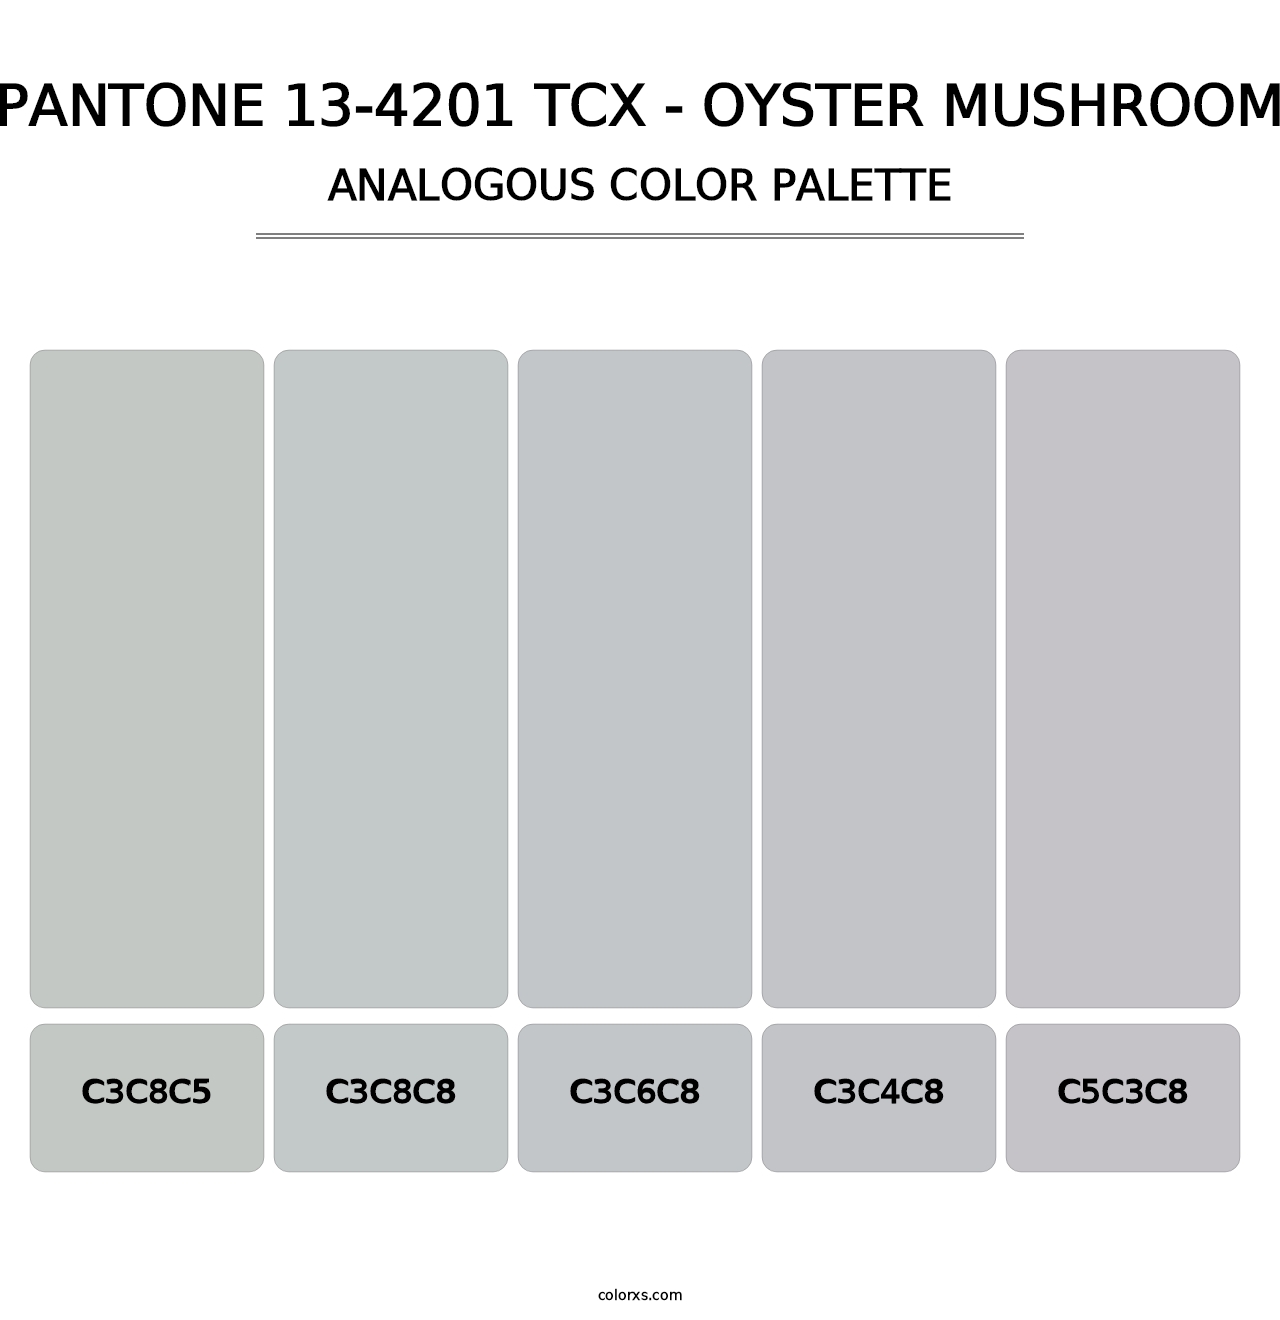 PANTONE 13-4201 TCX - Oyster Mushroom - Analogous Color Palette